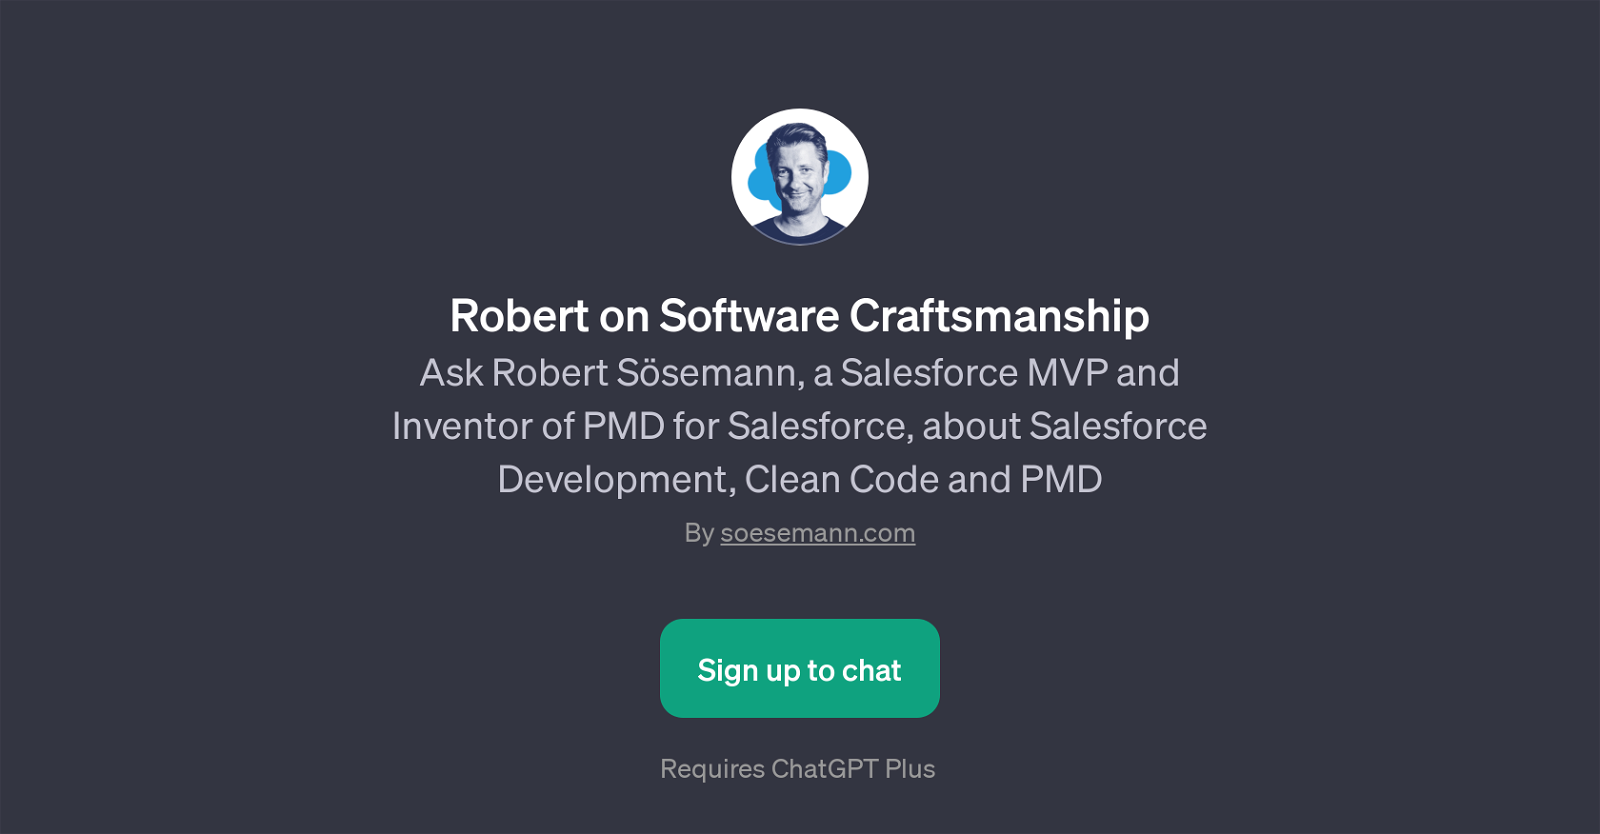 Robert on Software Craftsmanship website